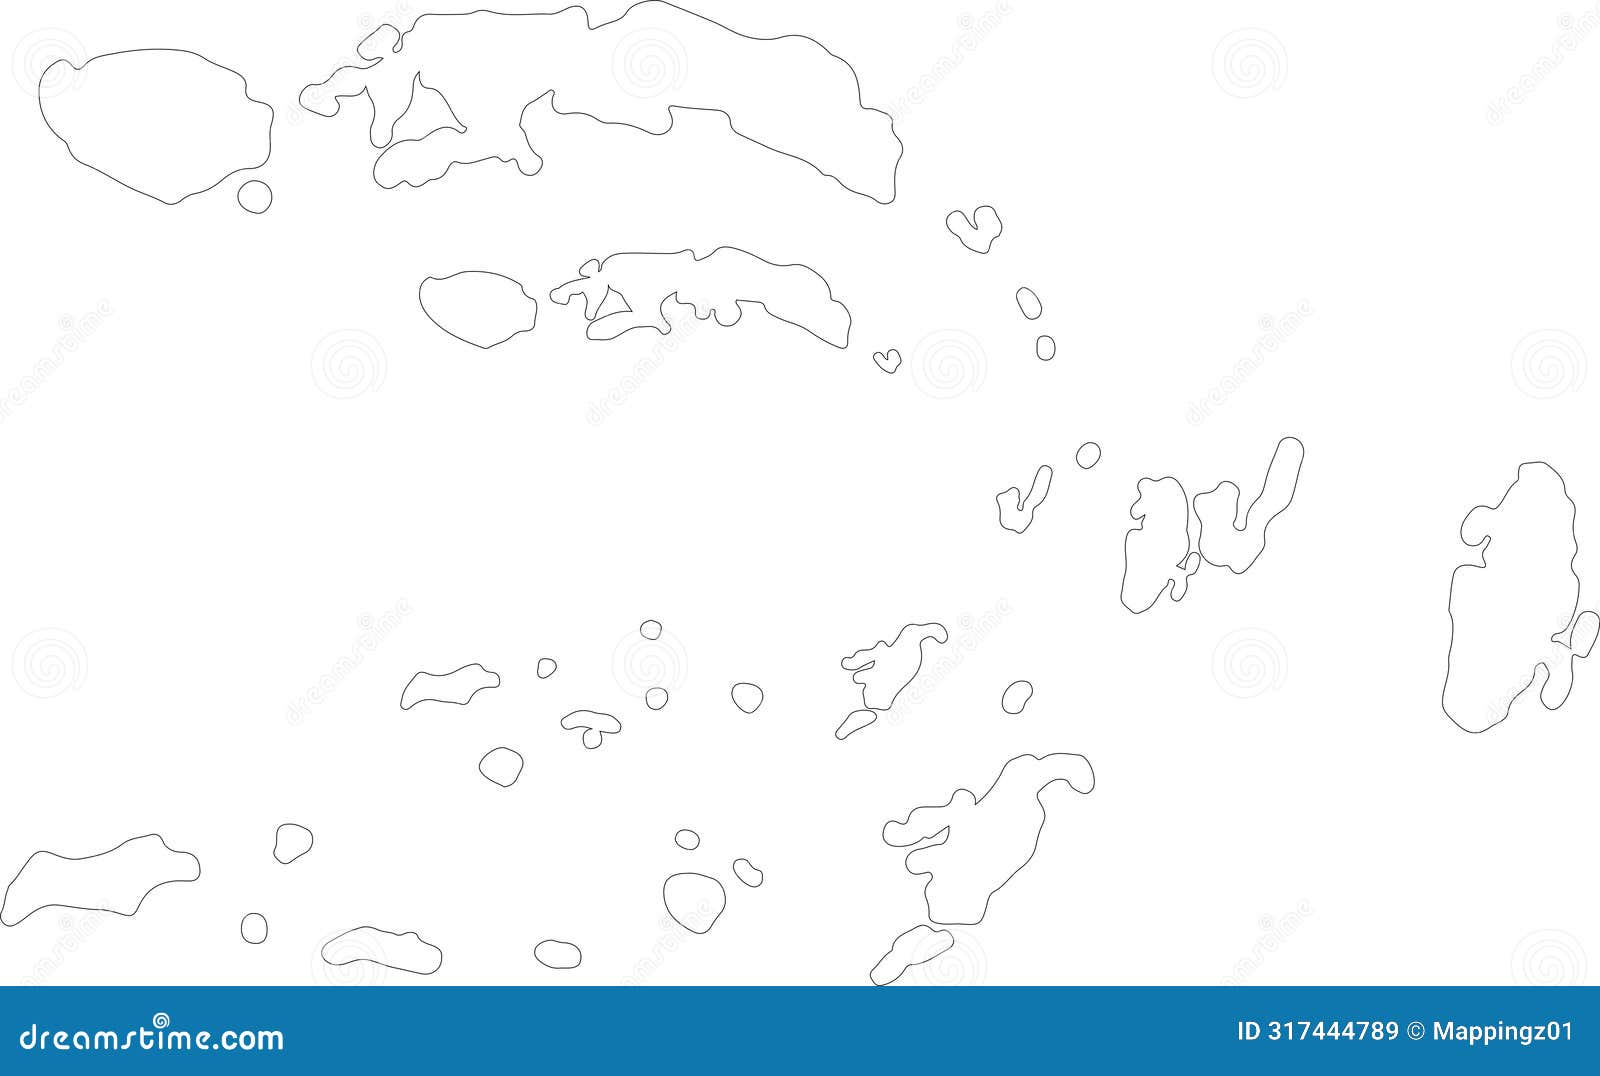 maluku indonesia outline map